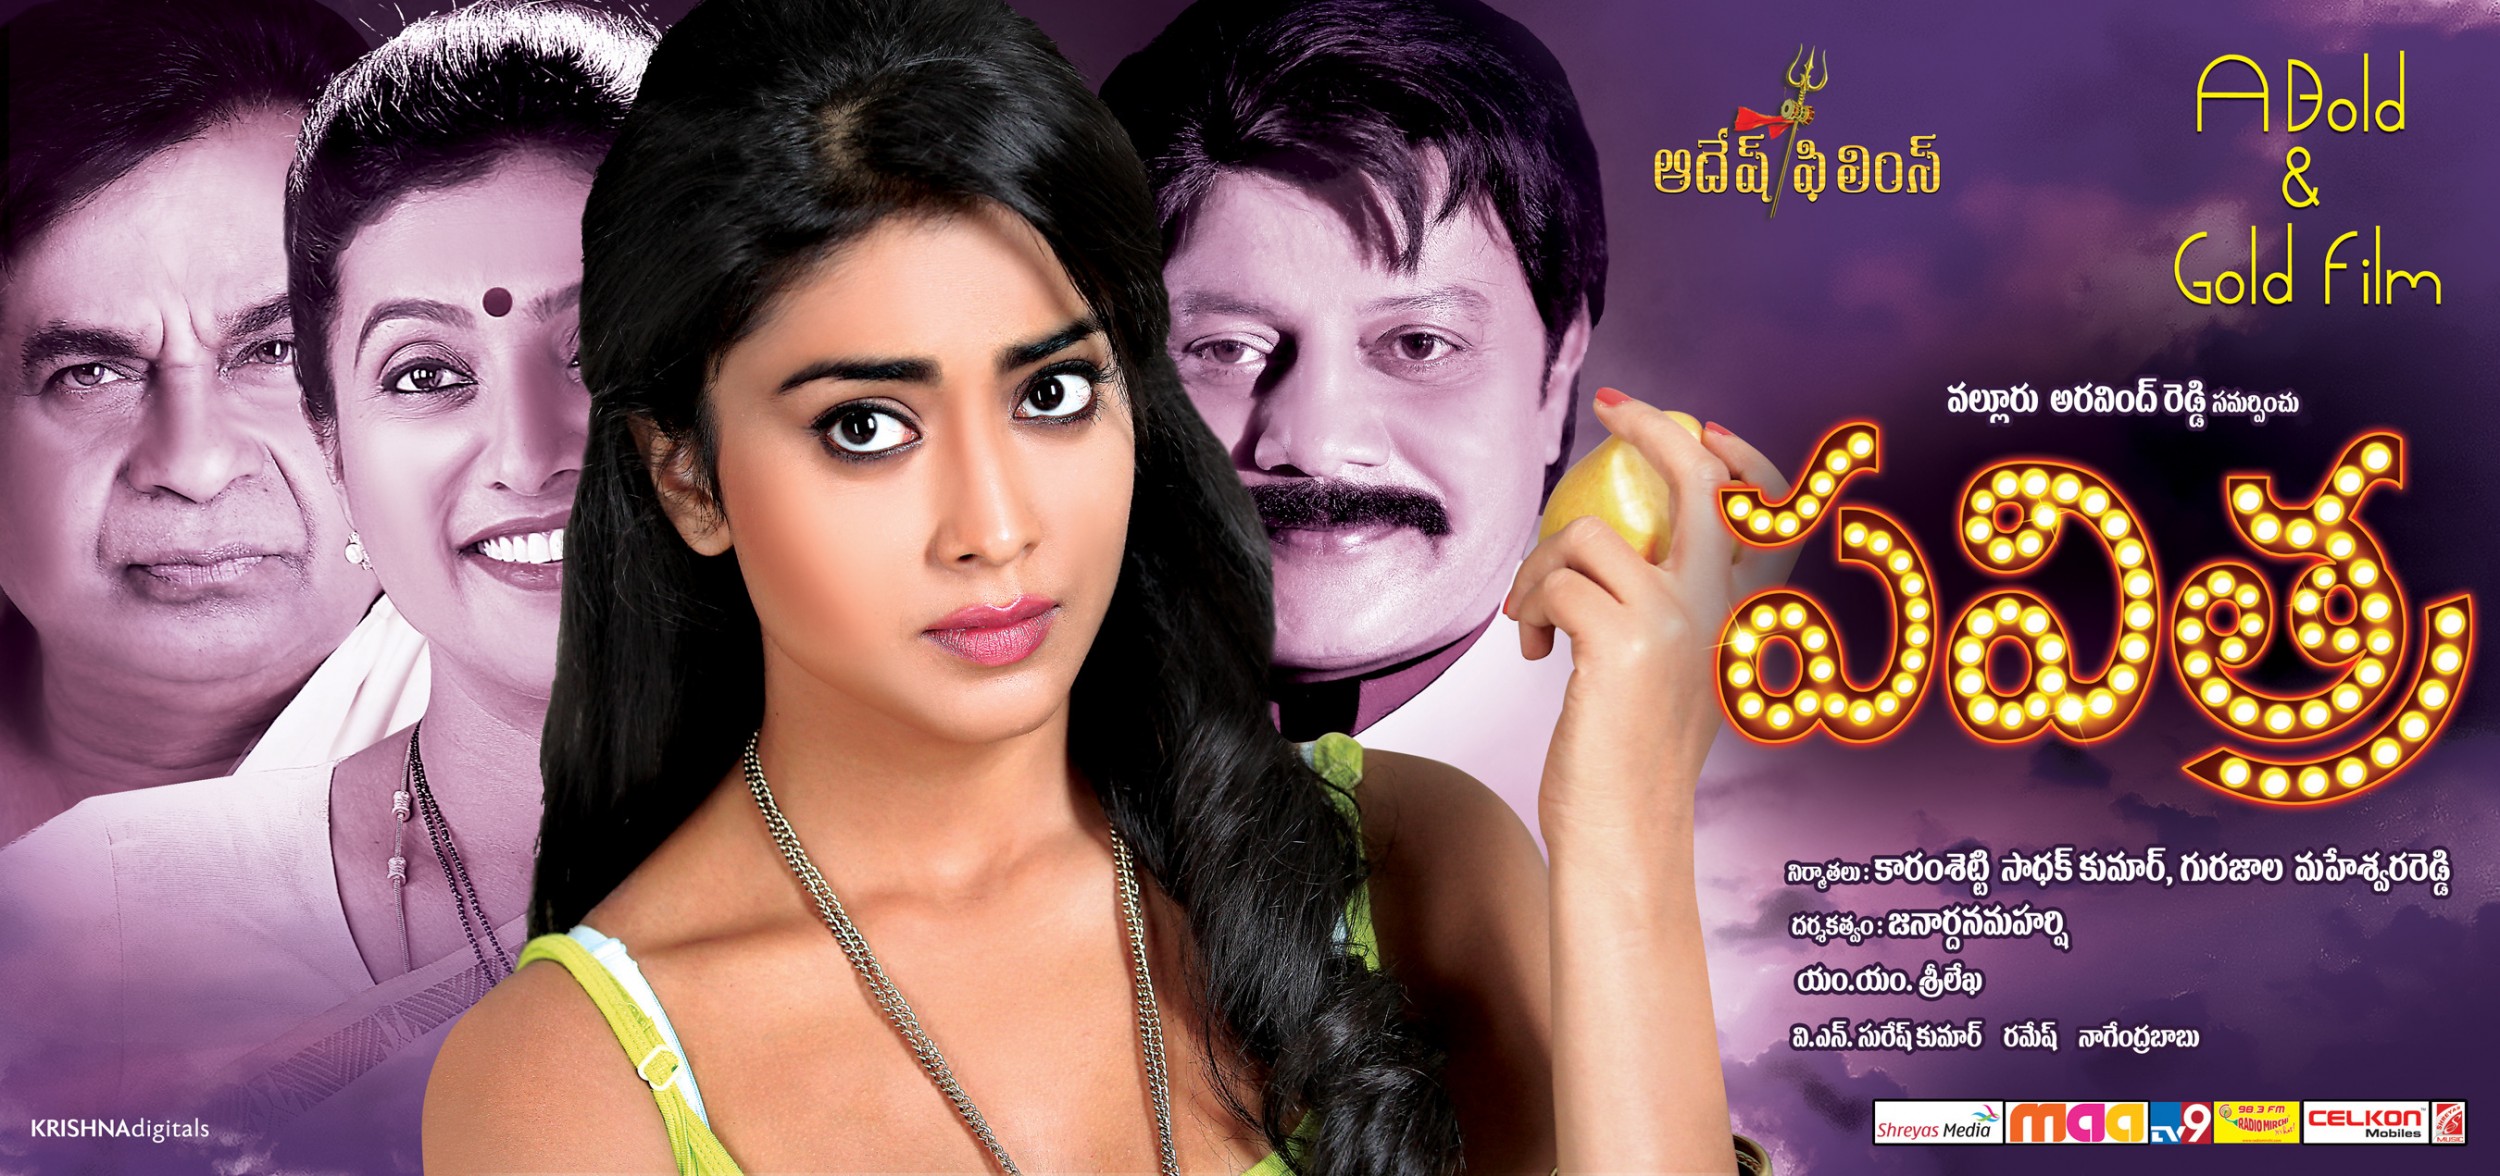 Mega Sized Movie Poster Image for Pavritha (#14 of 15)